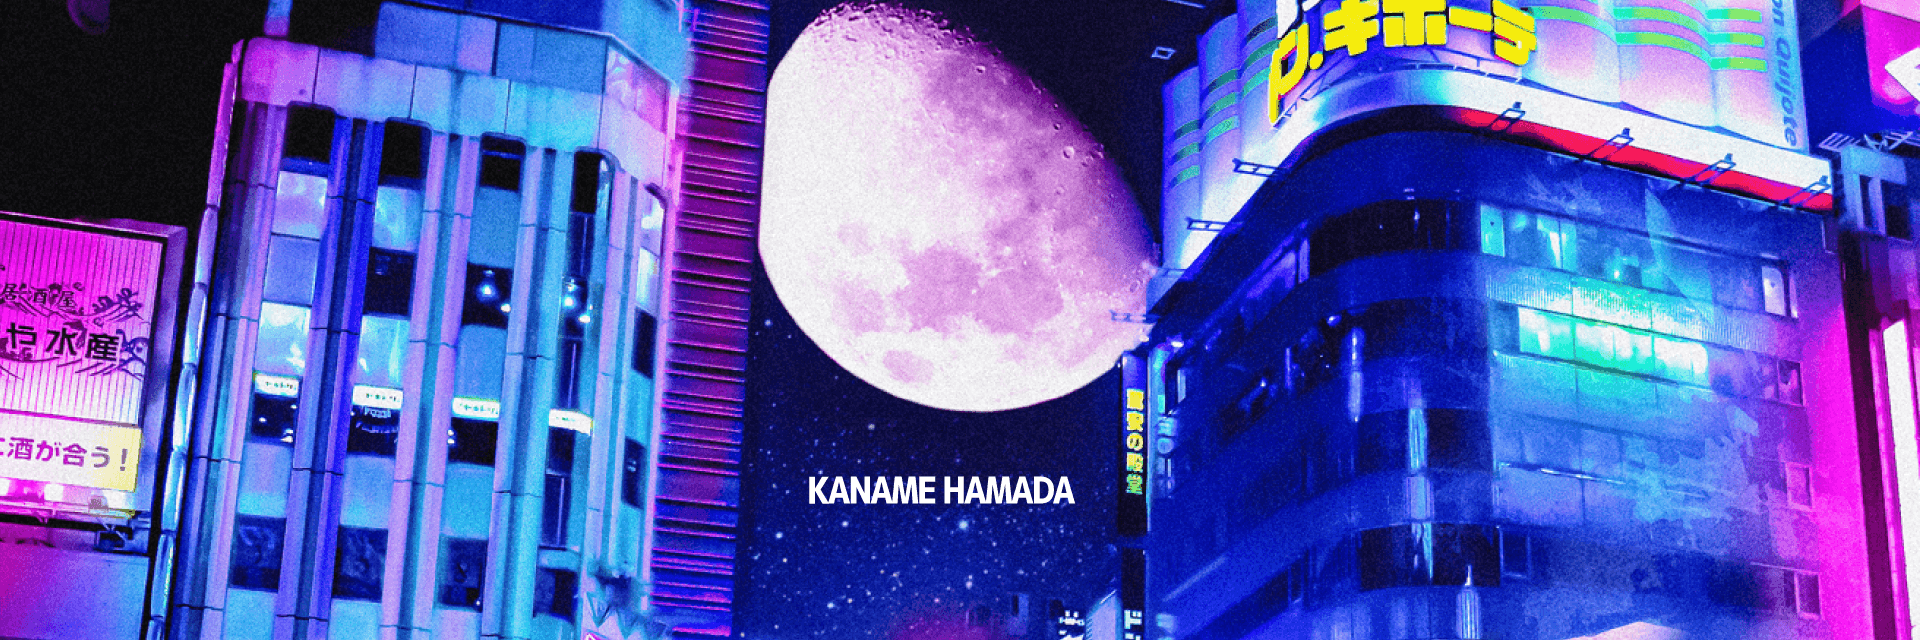 kanamehamada530 banner